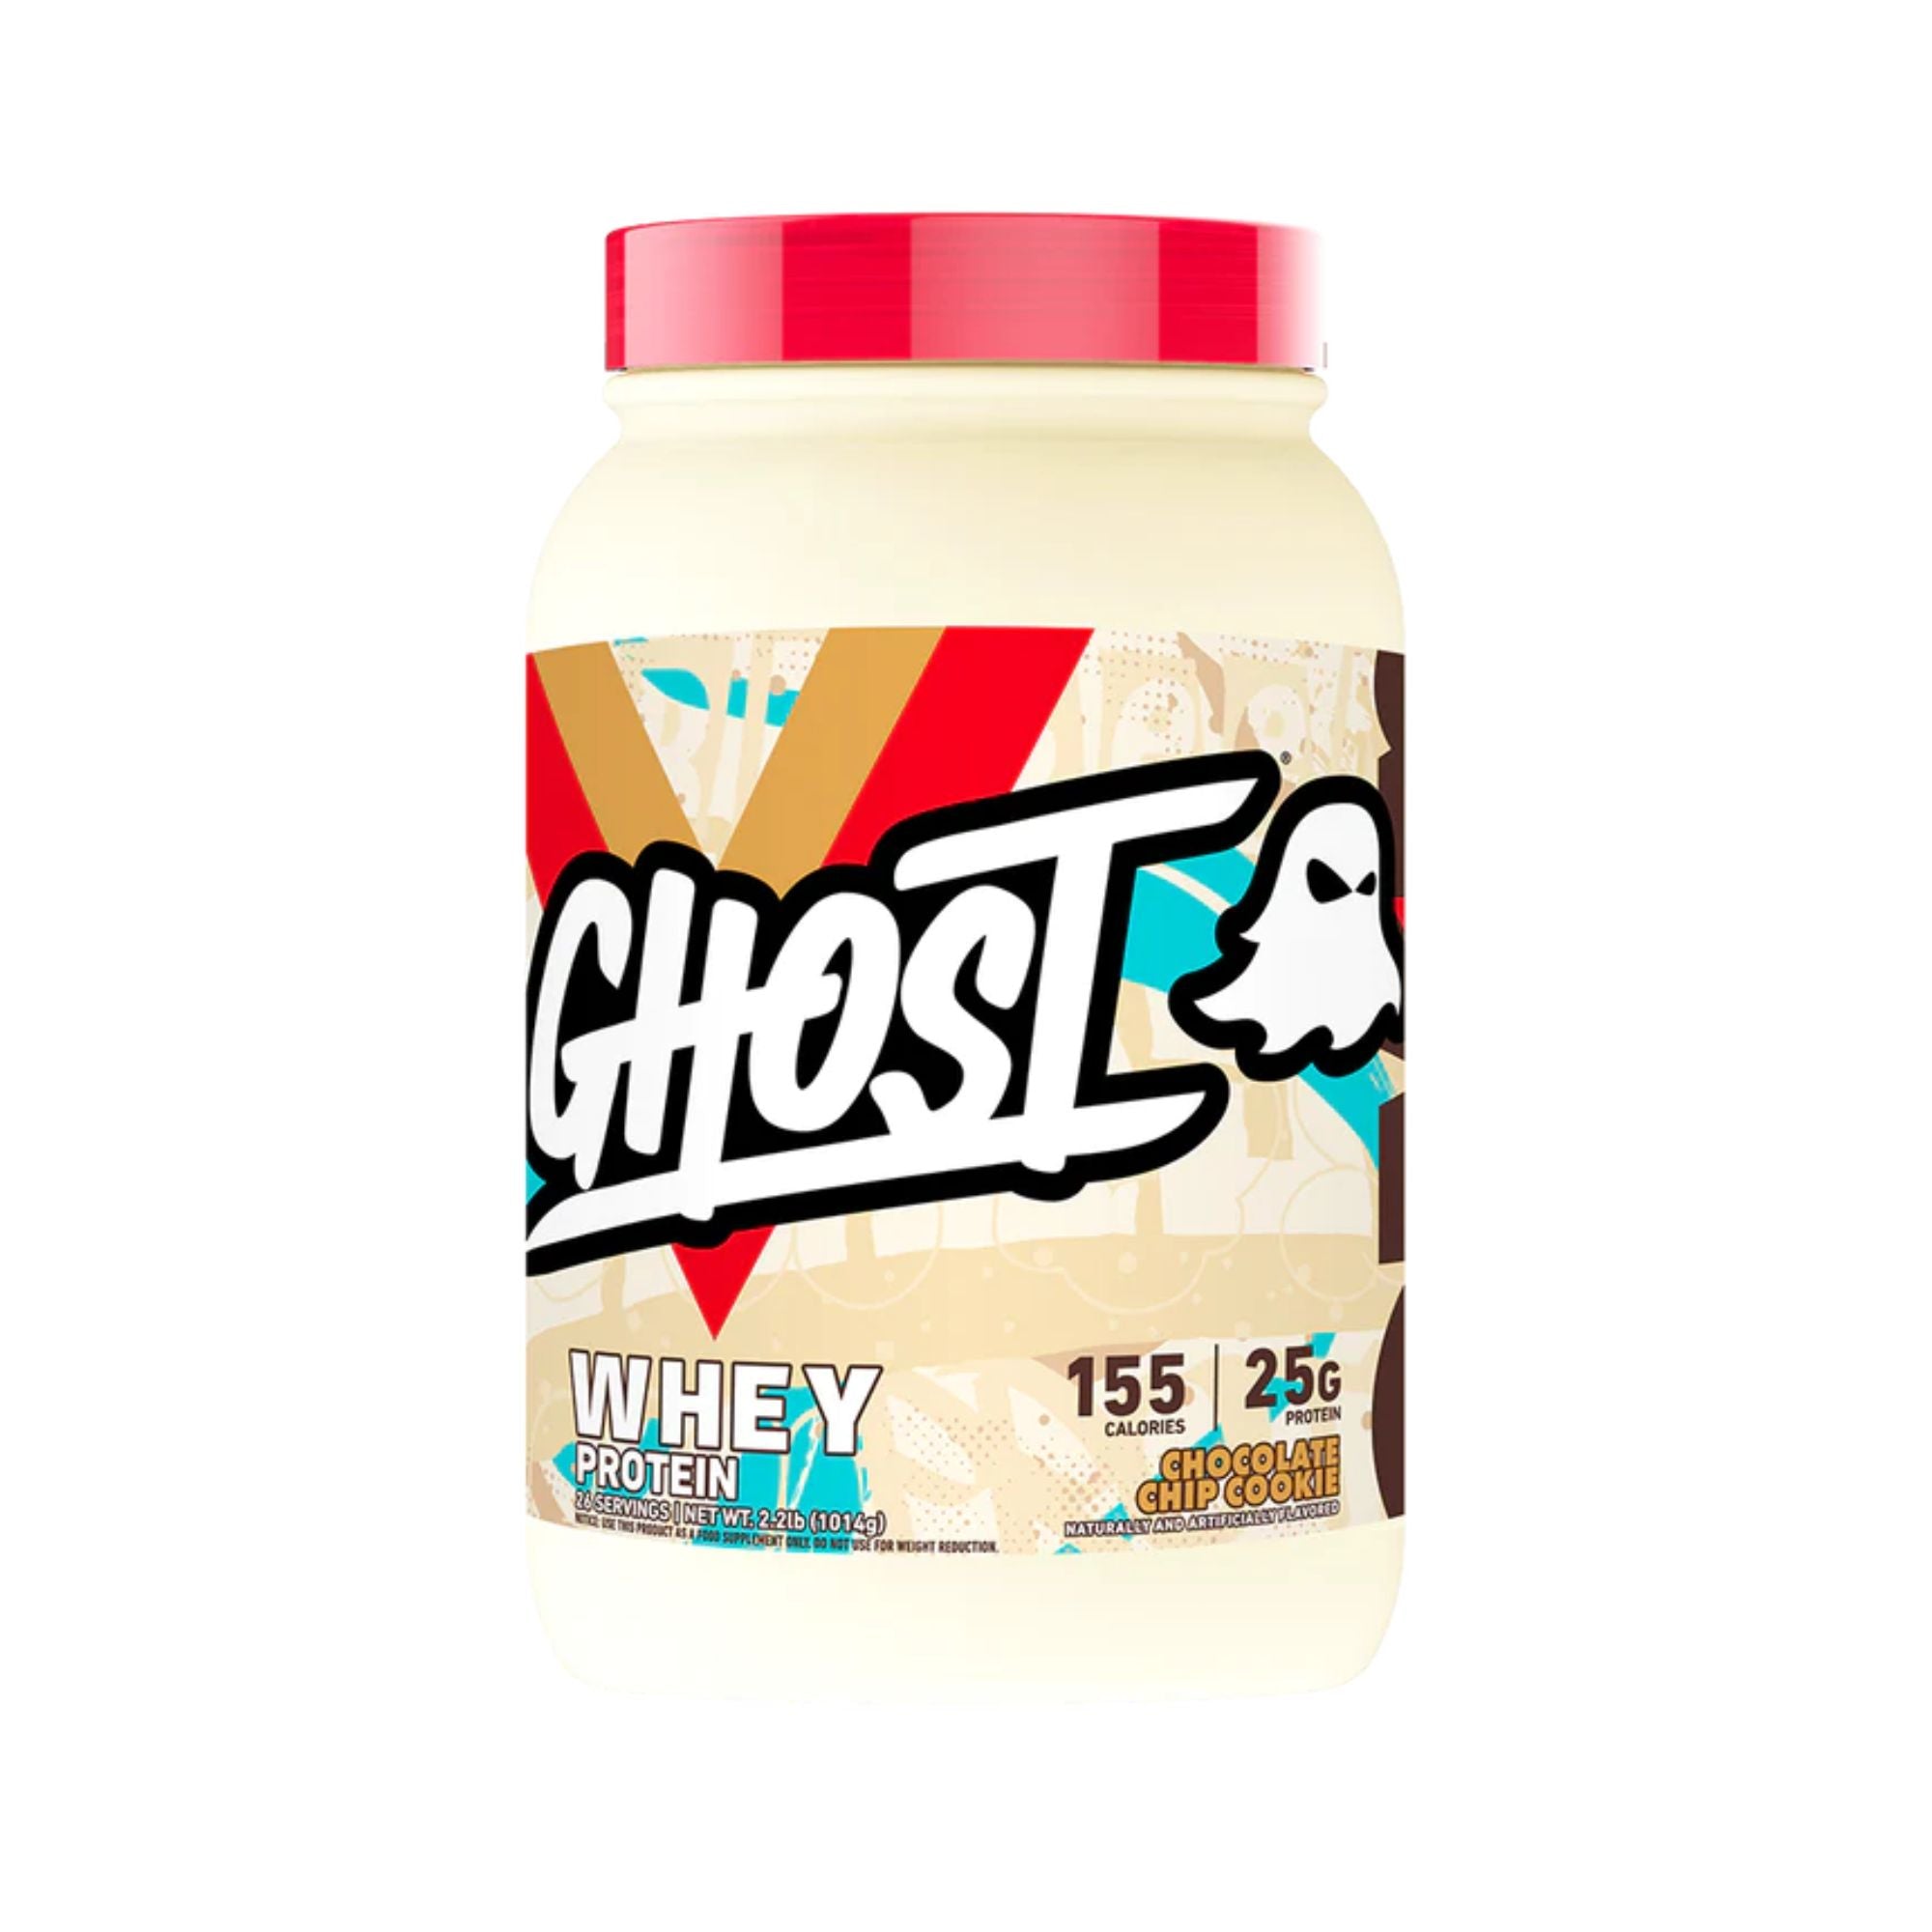 Ghost Whey Protein Powder